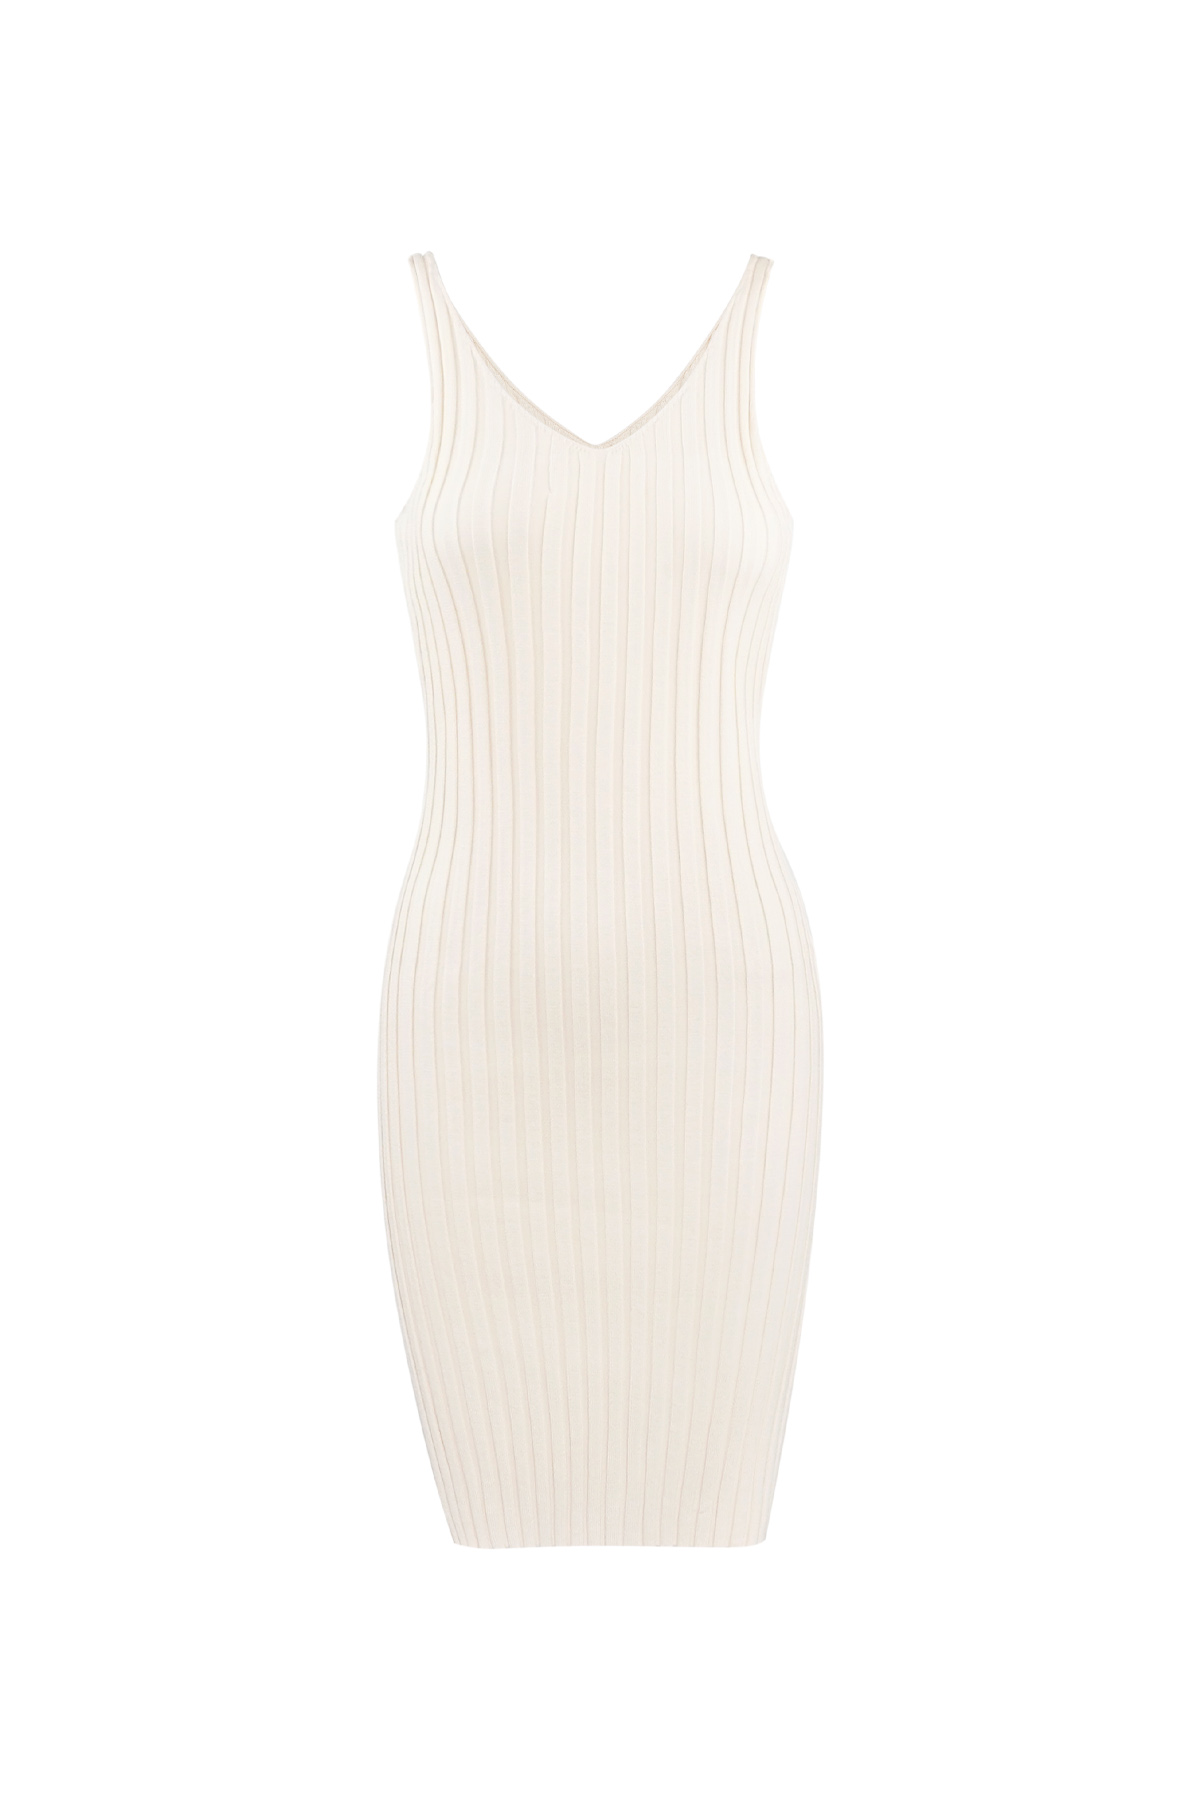 Örme elbisenin temel rengi - kirli beyaz h5 